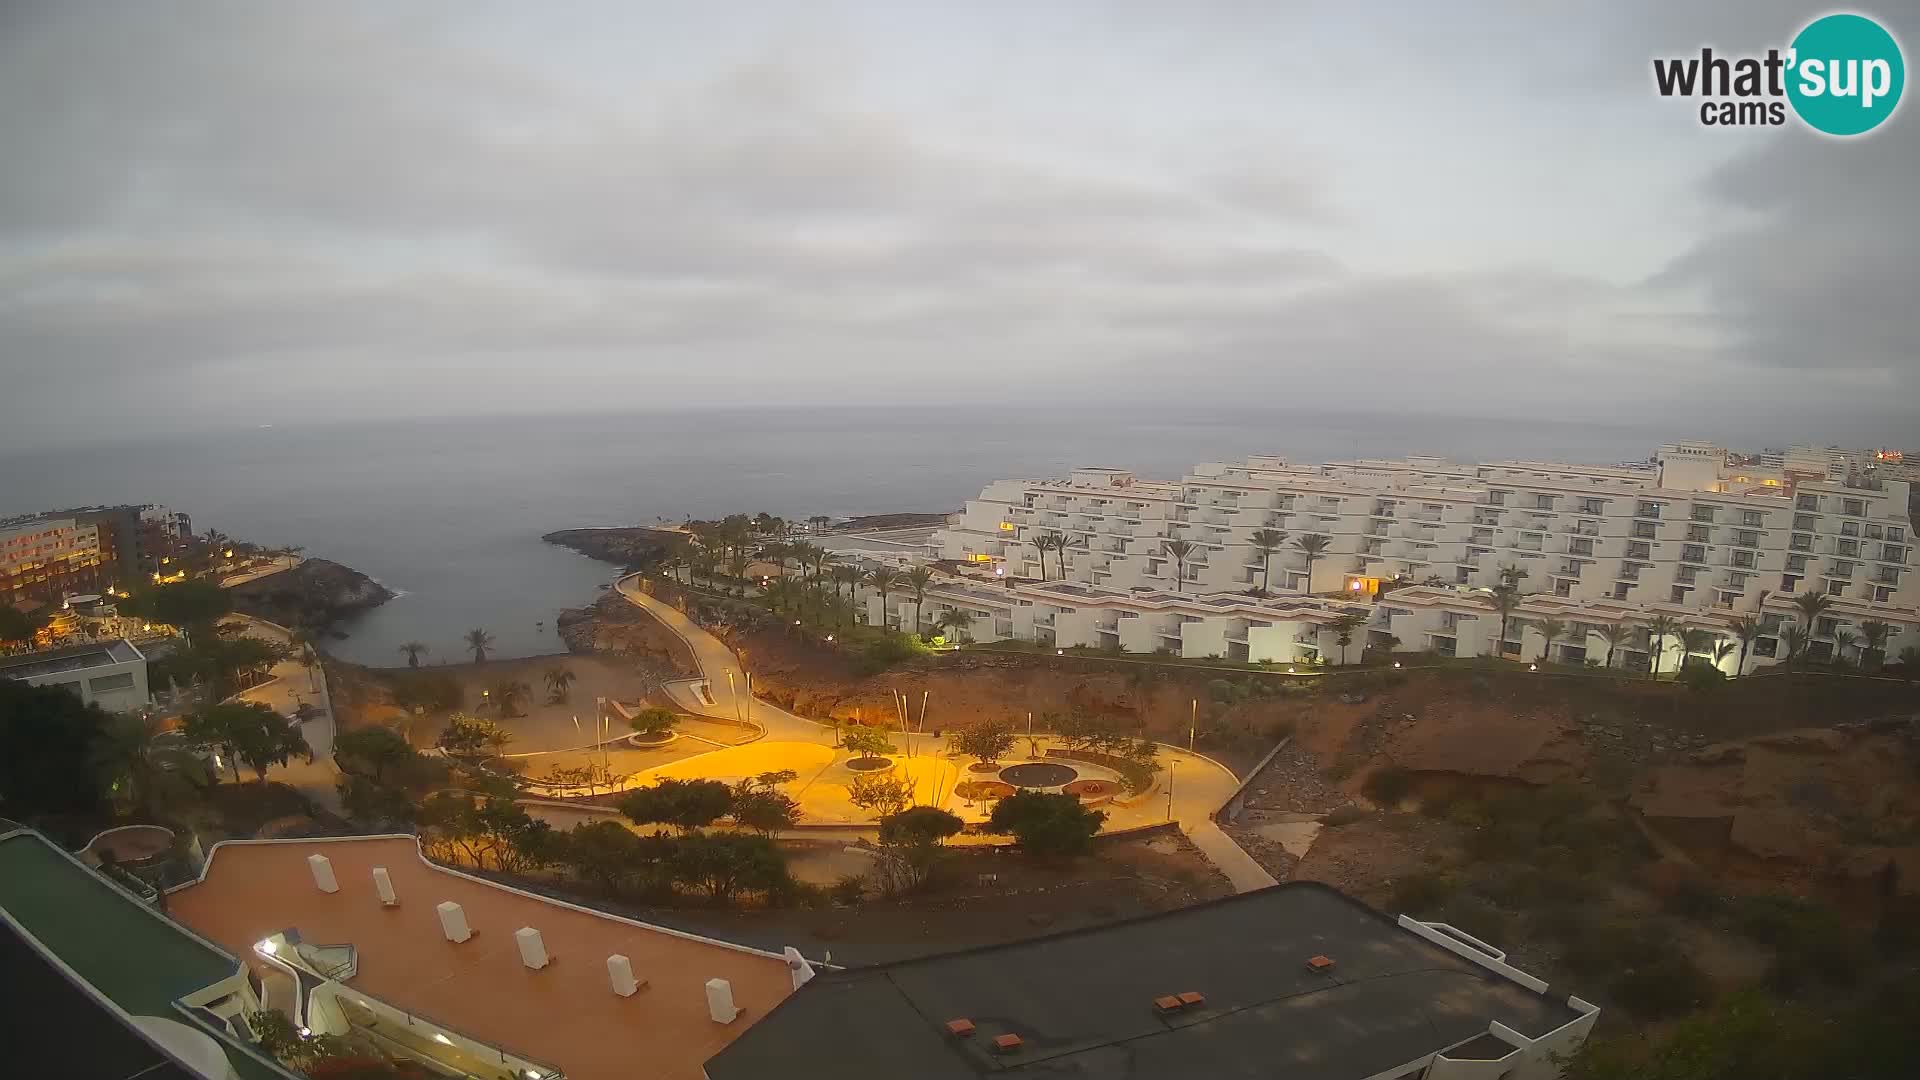 Web kamera uživo Playa de Las Galgas – Playa Paraiso – otok La Gomera – Costa Adeje – Tenerife